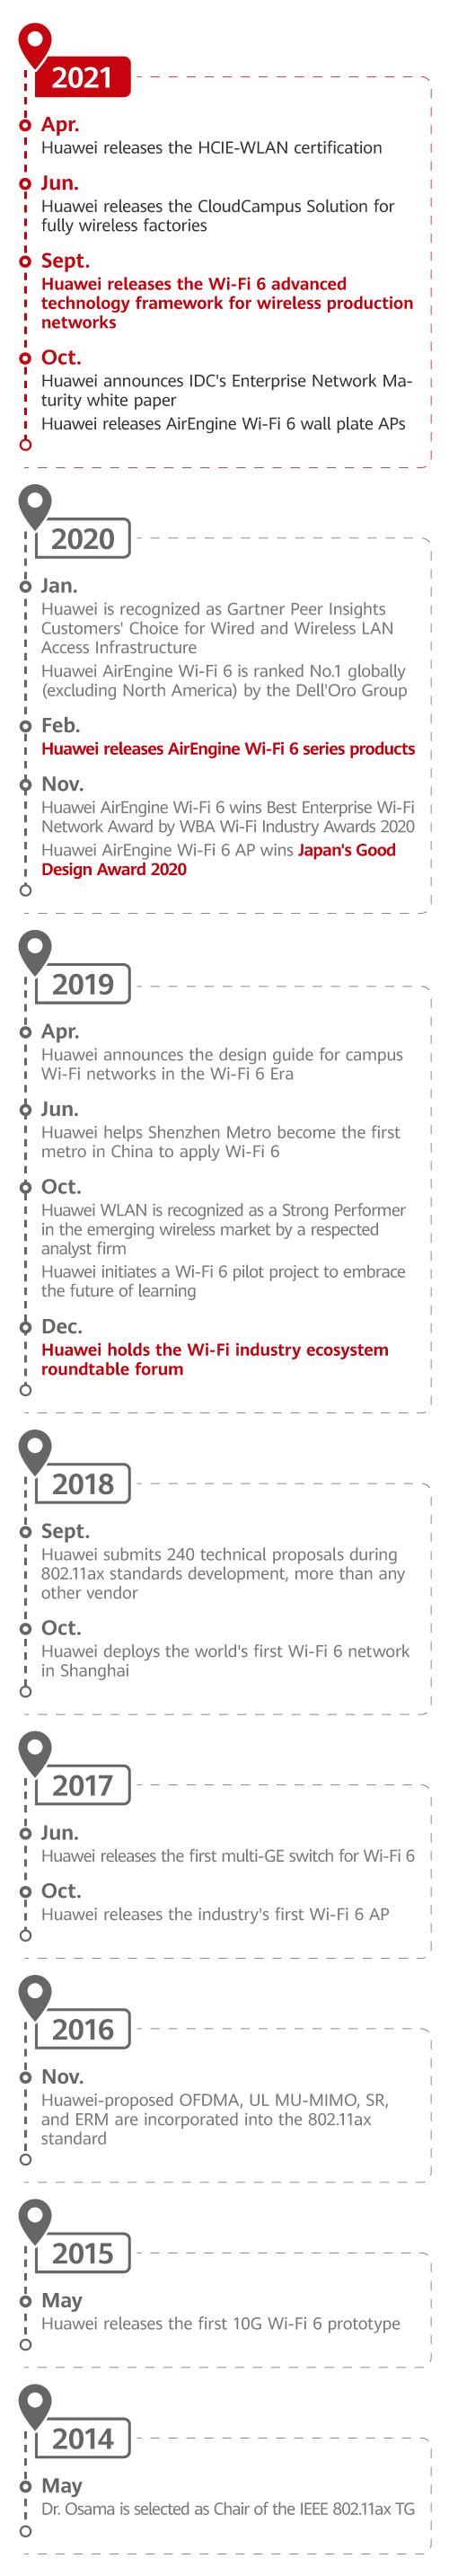 Wi-Fi 6開発においてファーウェイが提出した技術提案や貢献を示した年表:モバイル用